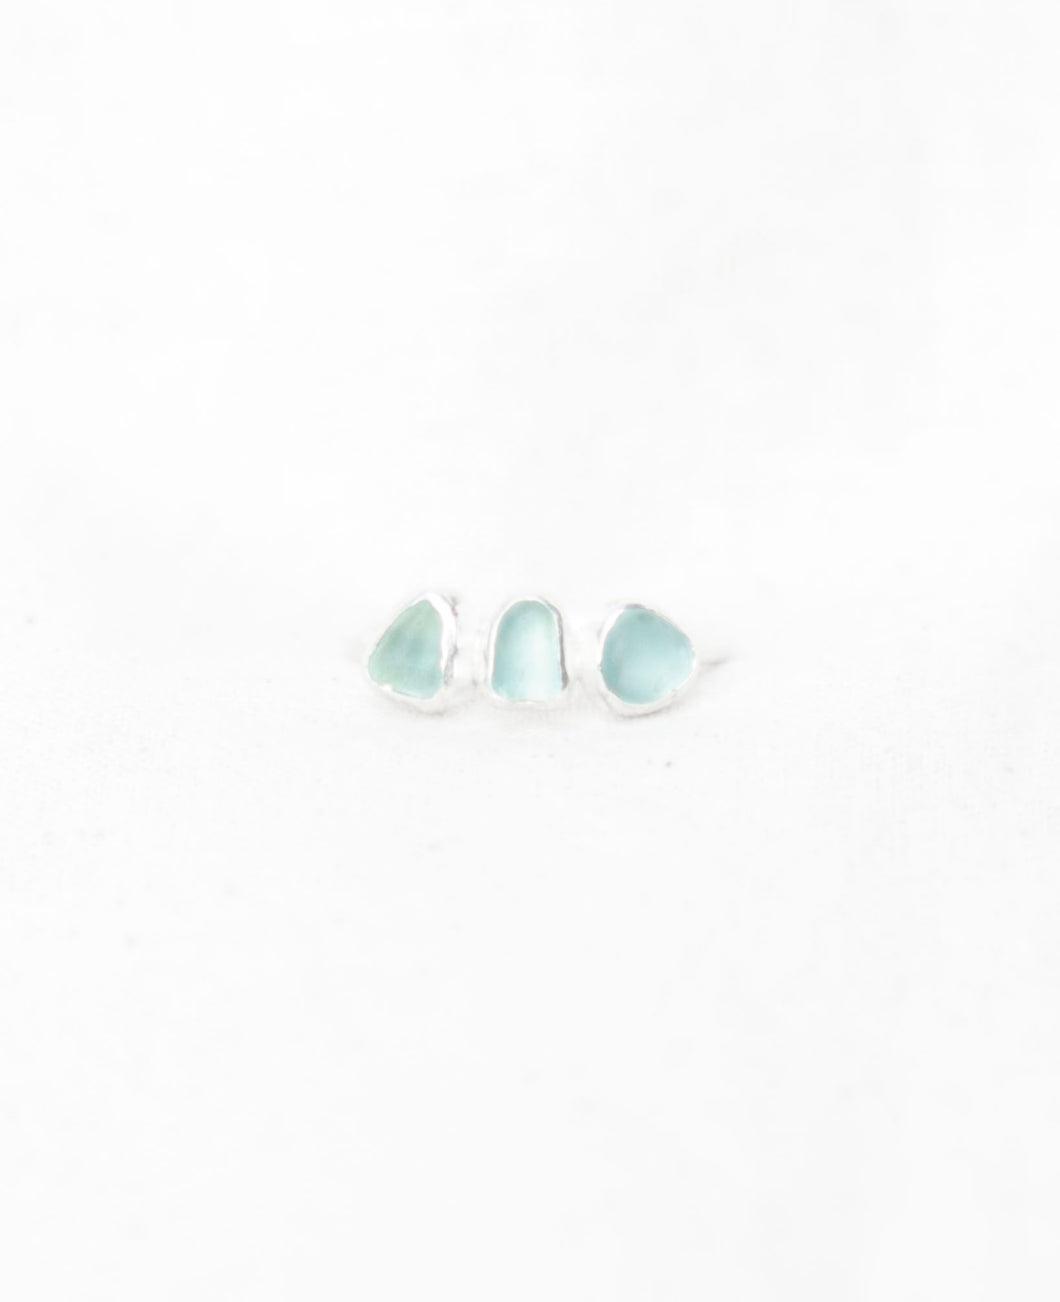 Light Blue Sea Glass - Size Q